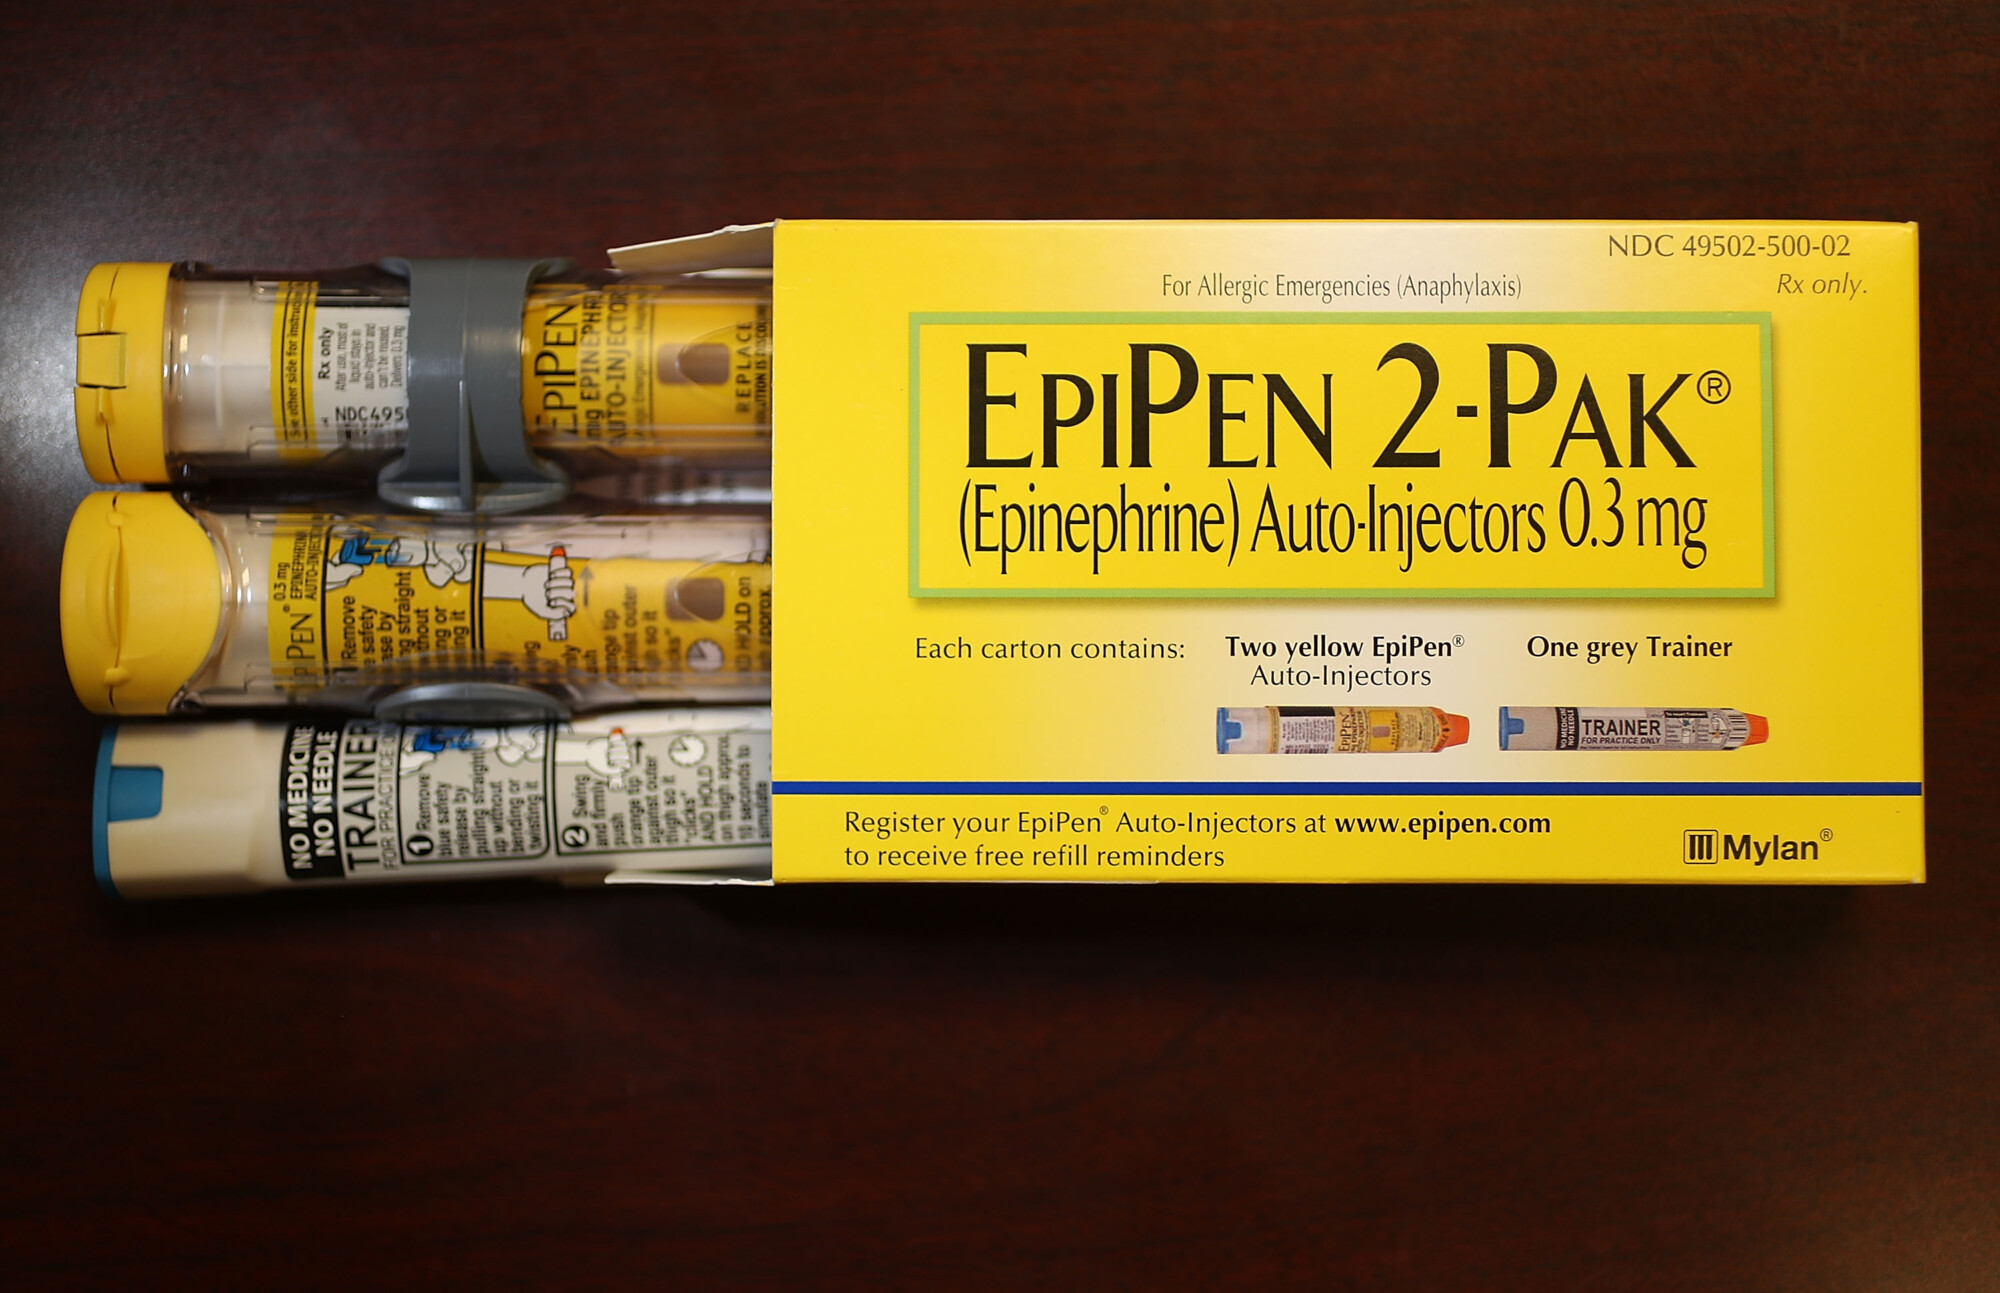 Biden Administration Suspends Trump Executive Order to Lower Insulin, Epinephrine Prices